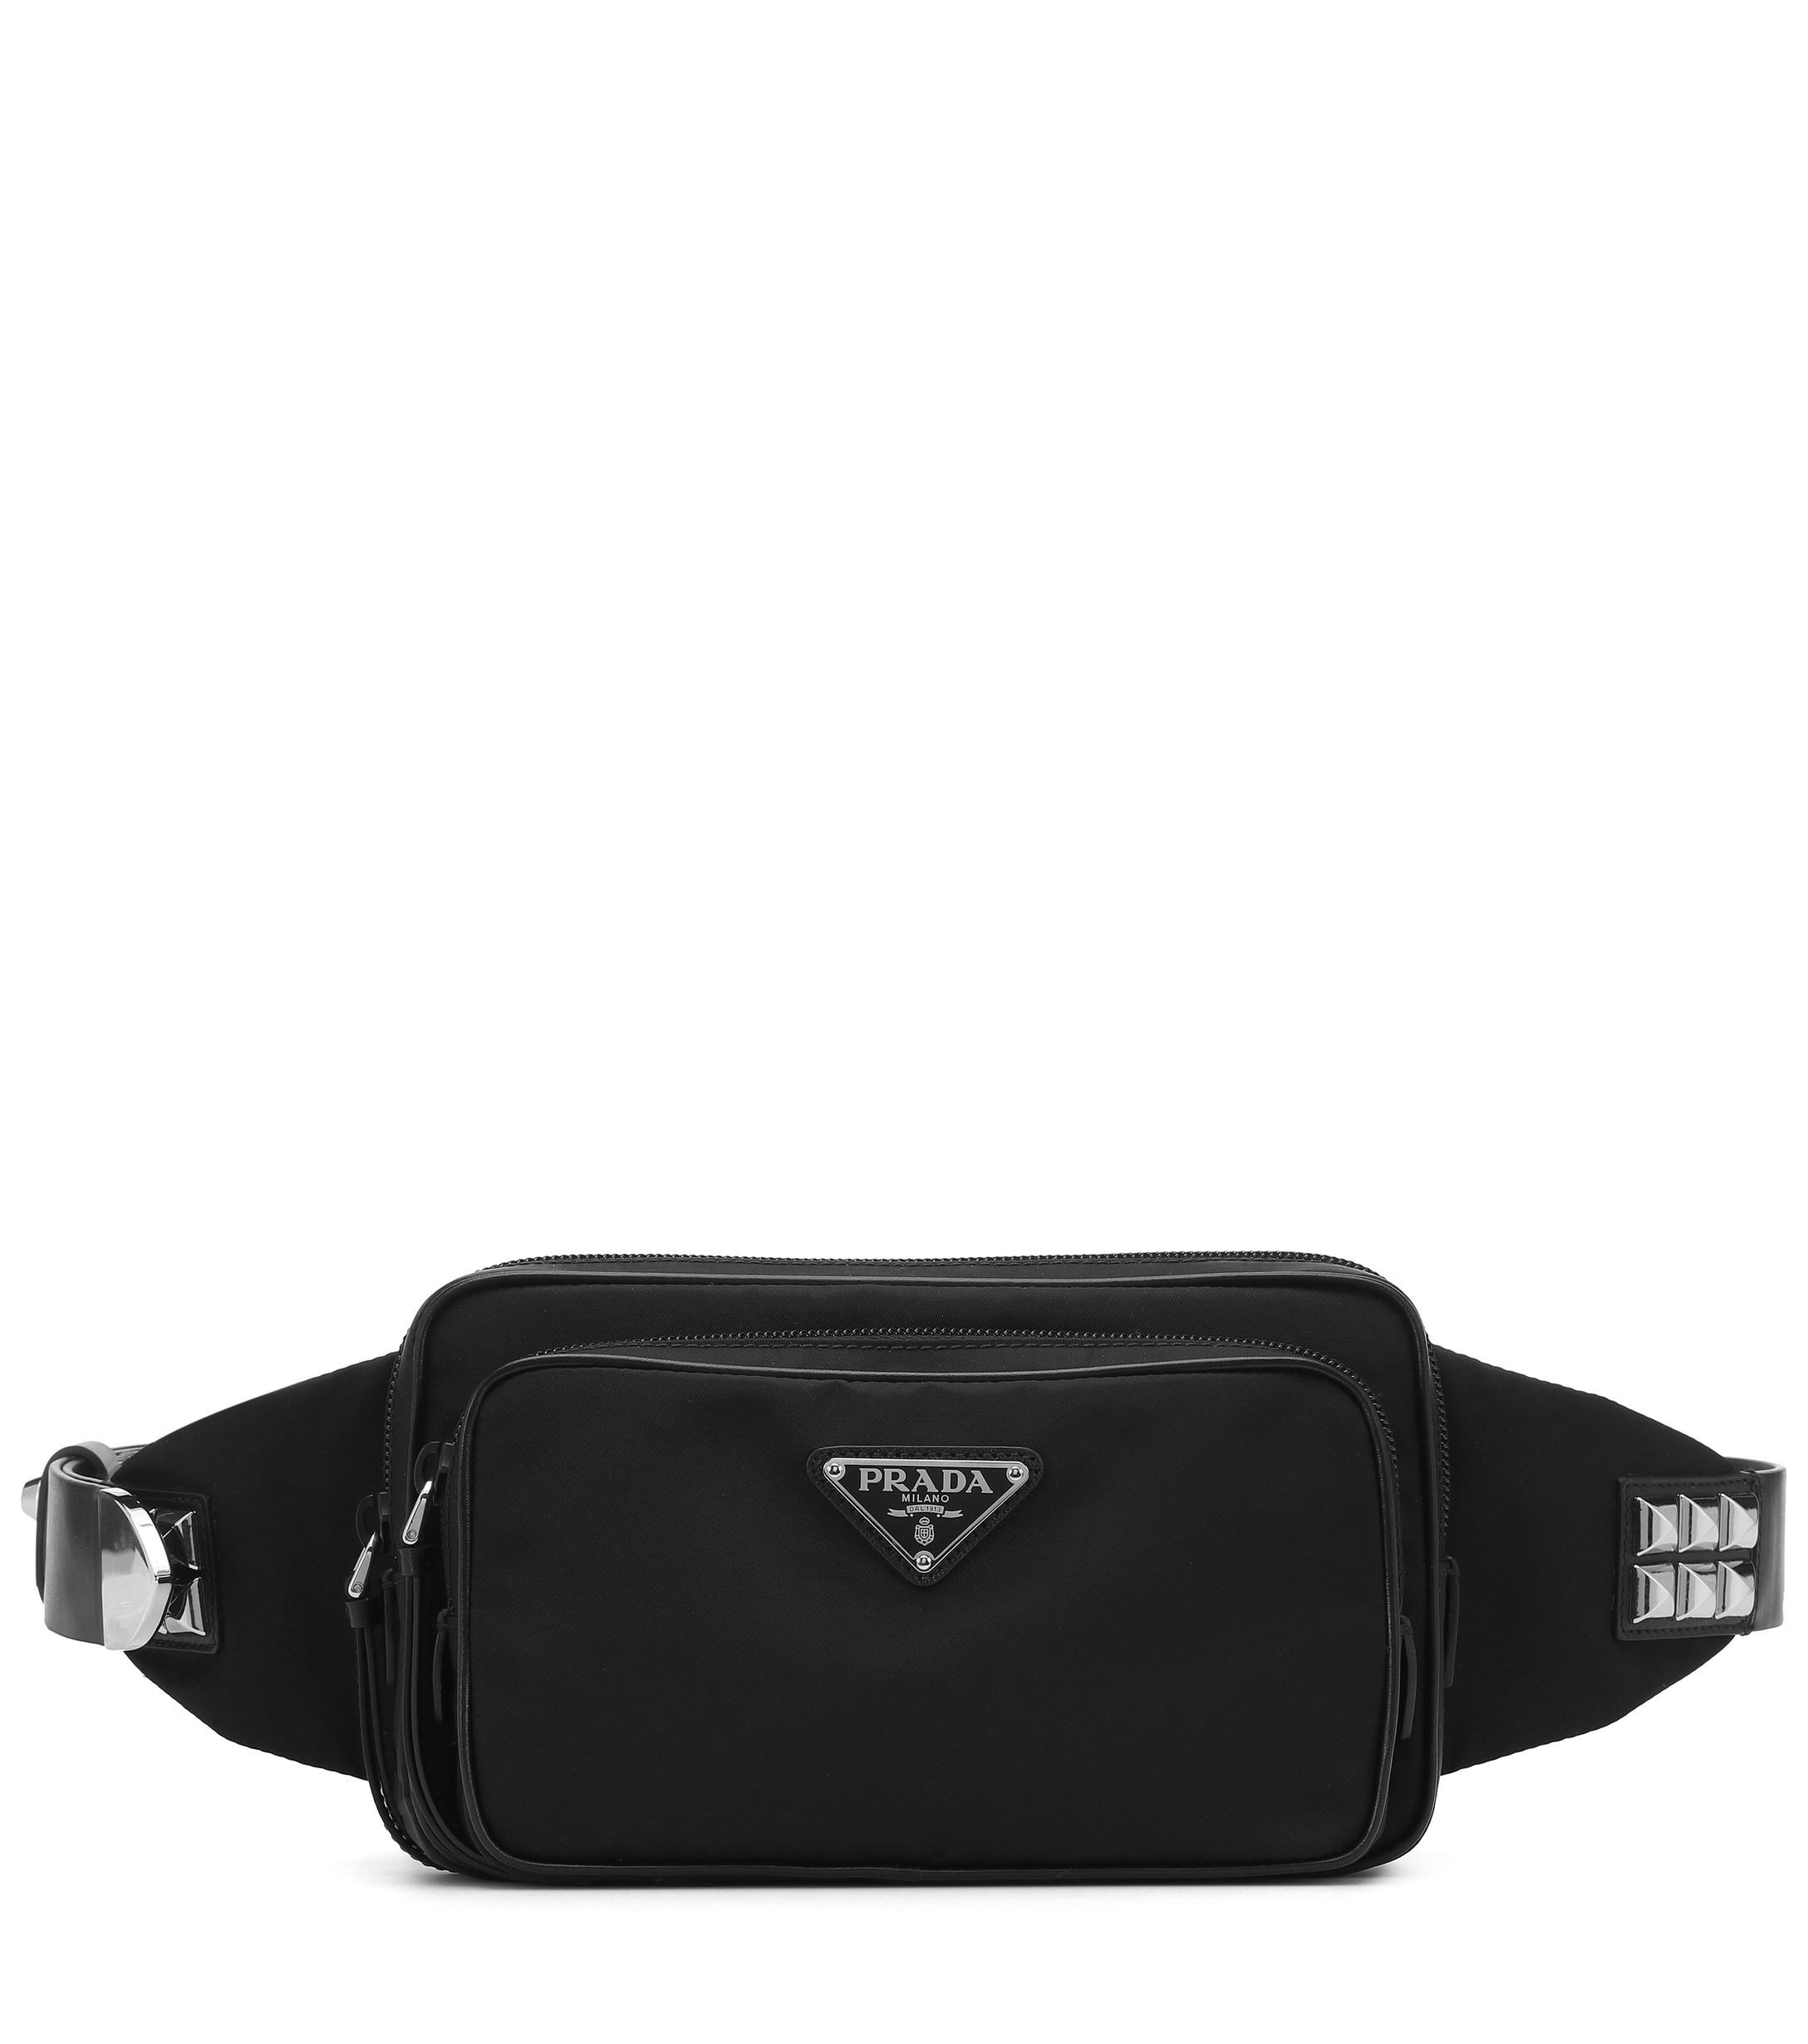 Prada Leather-trimmed Belt Bag in Nero (Black) - Lyst